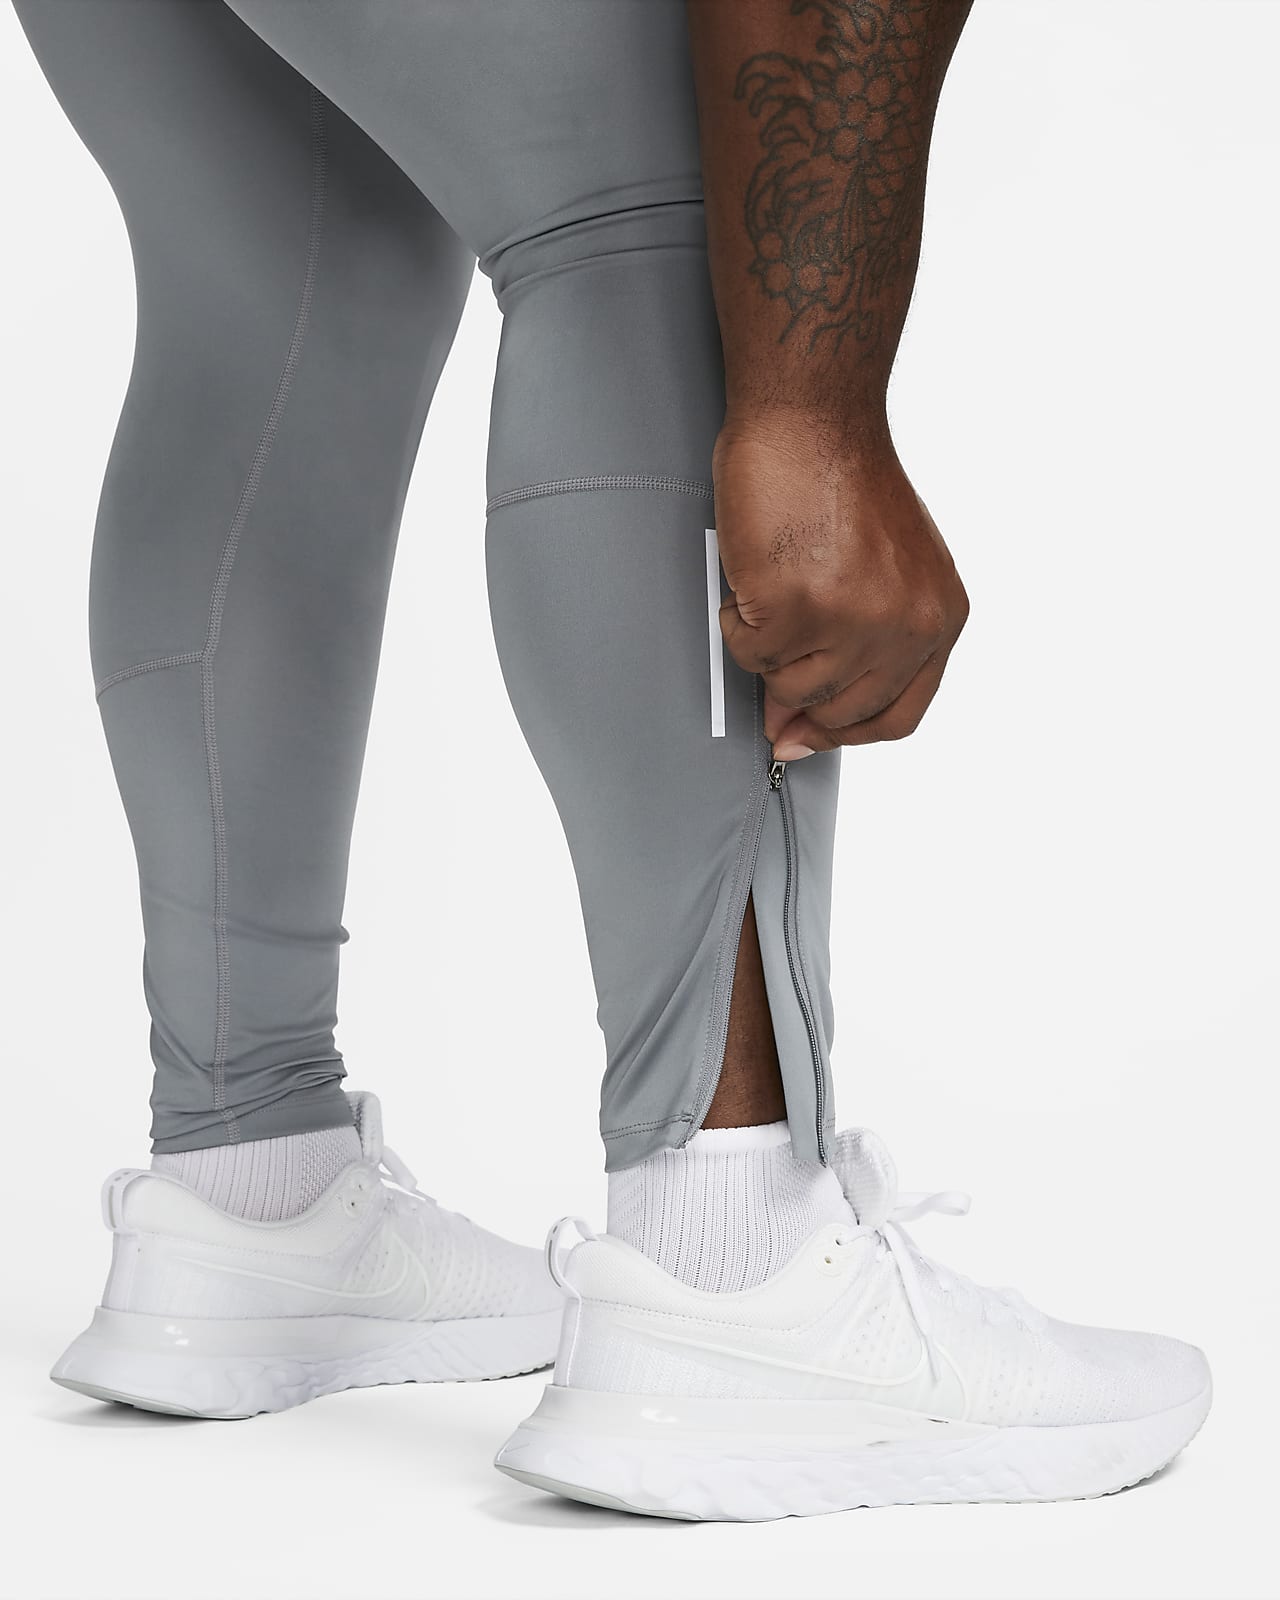 3/4 leggings Nike Dri-FIT - Trousers - Men's textile - Running